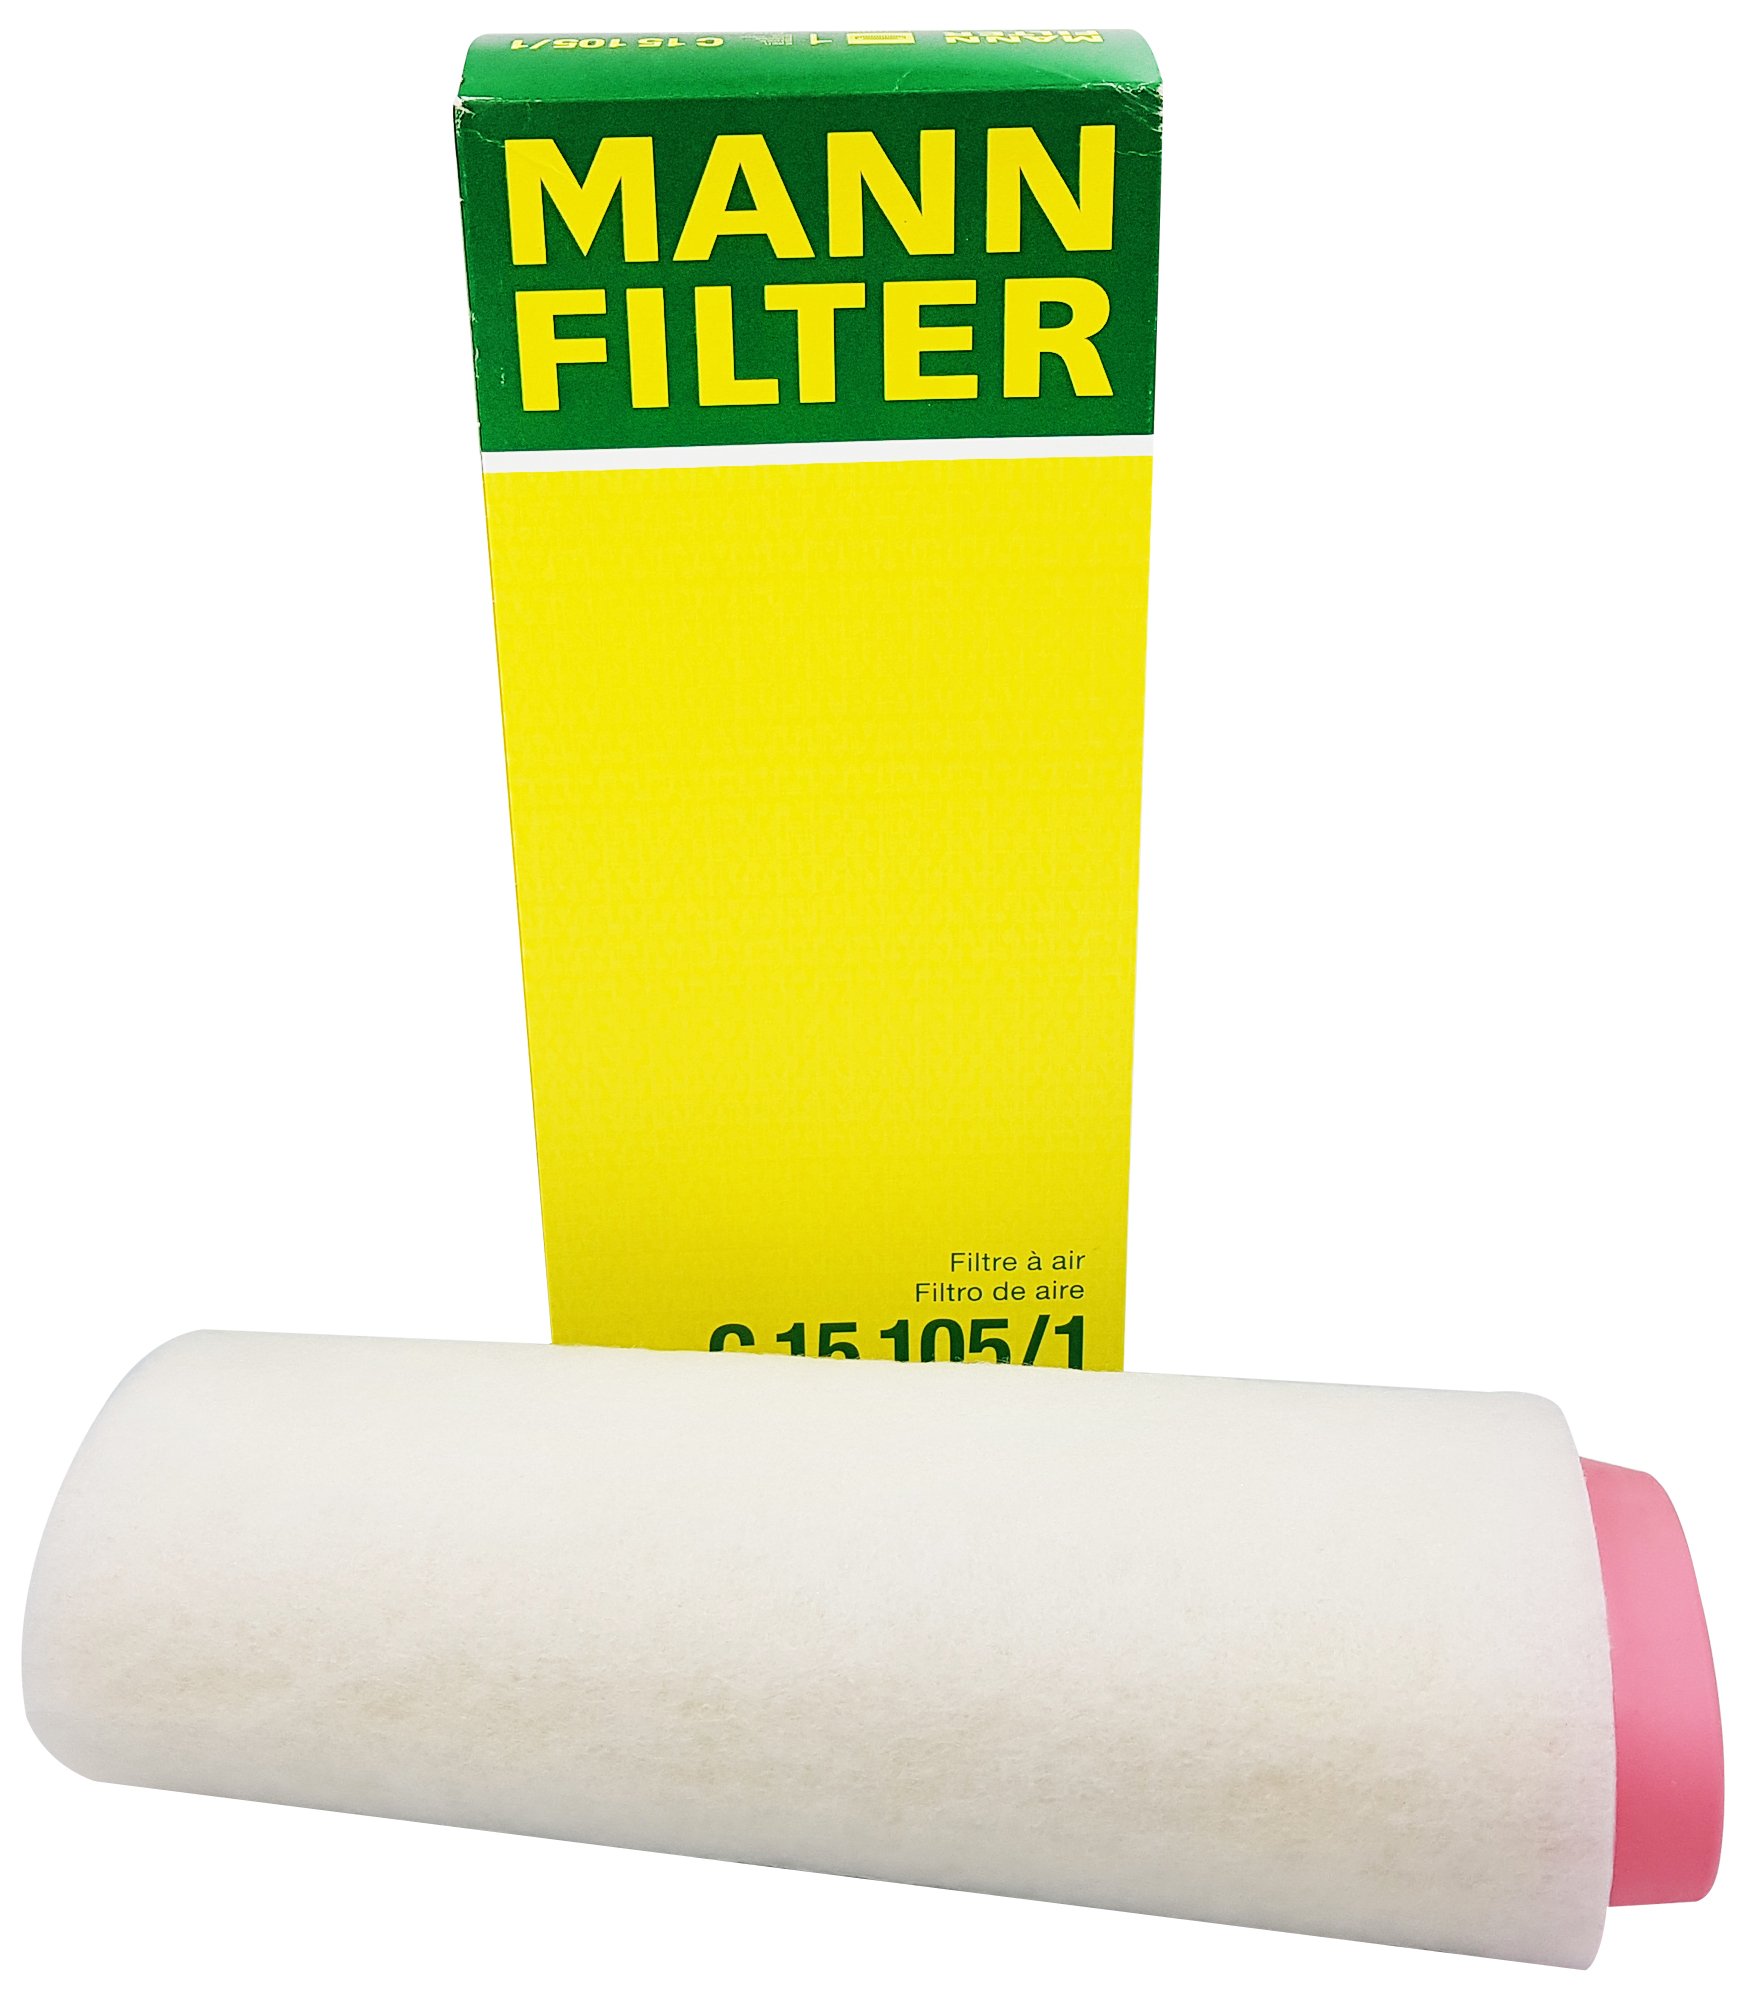 Original MANN-FILTER Filtro de Aire C 15 105/1 Air Filtro